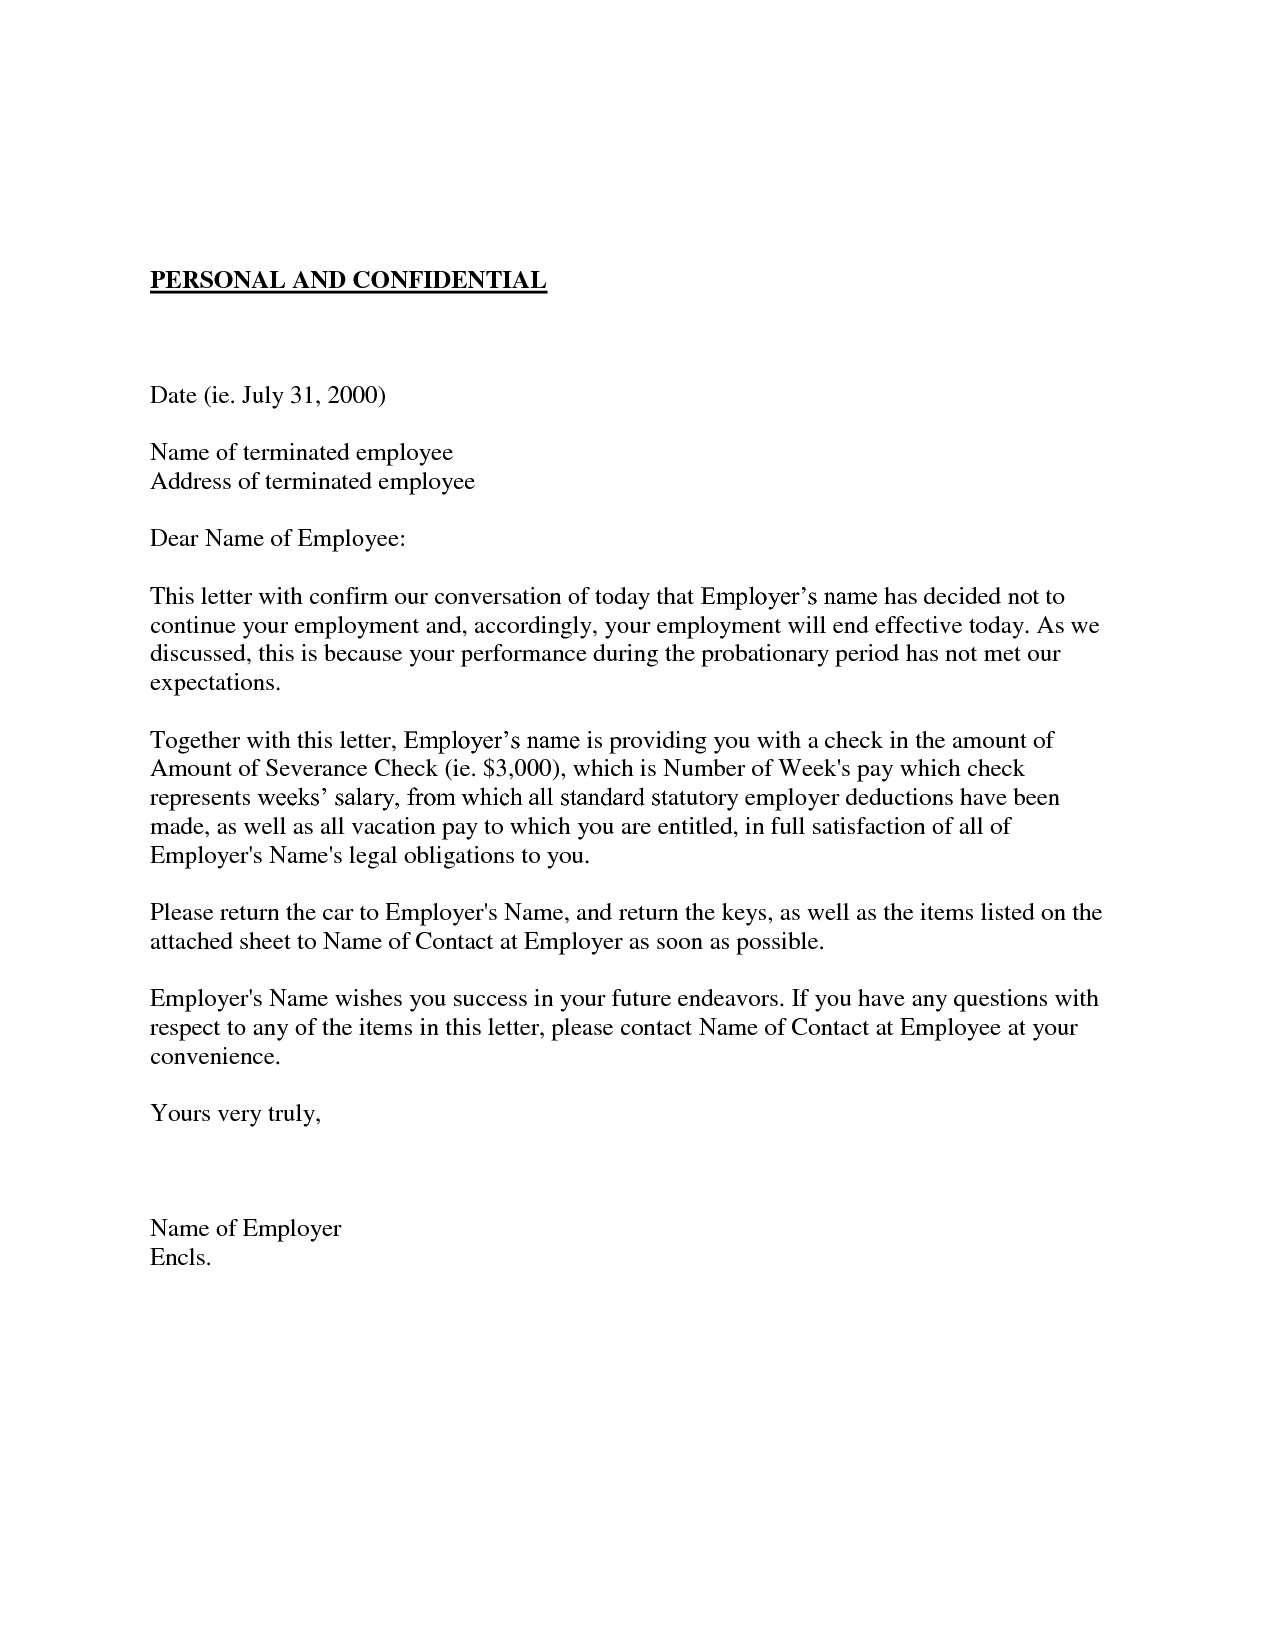 Employee Probation Termination Letter